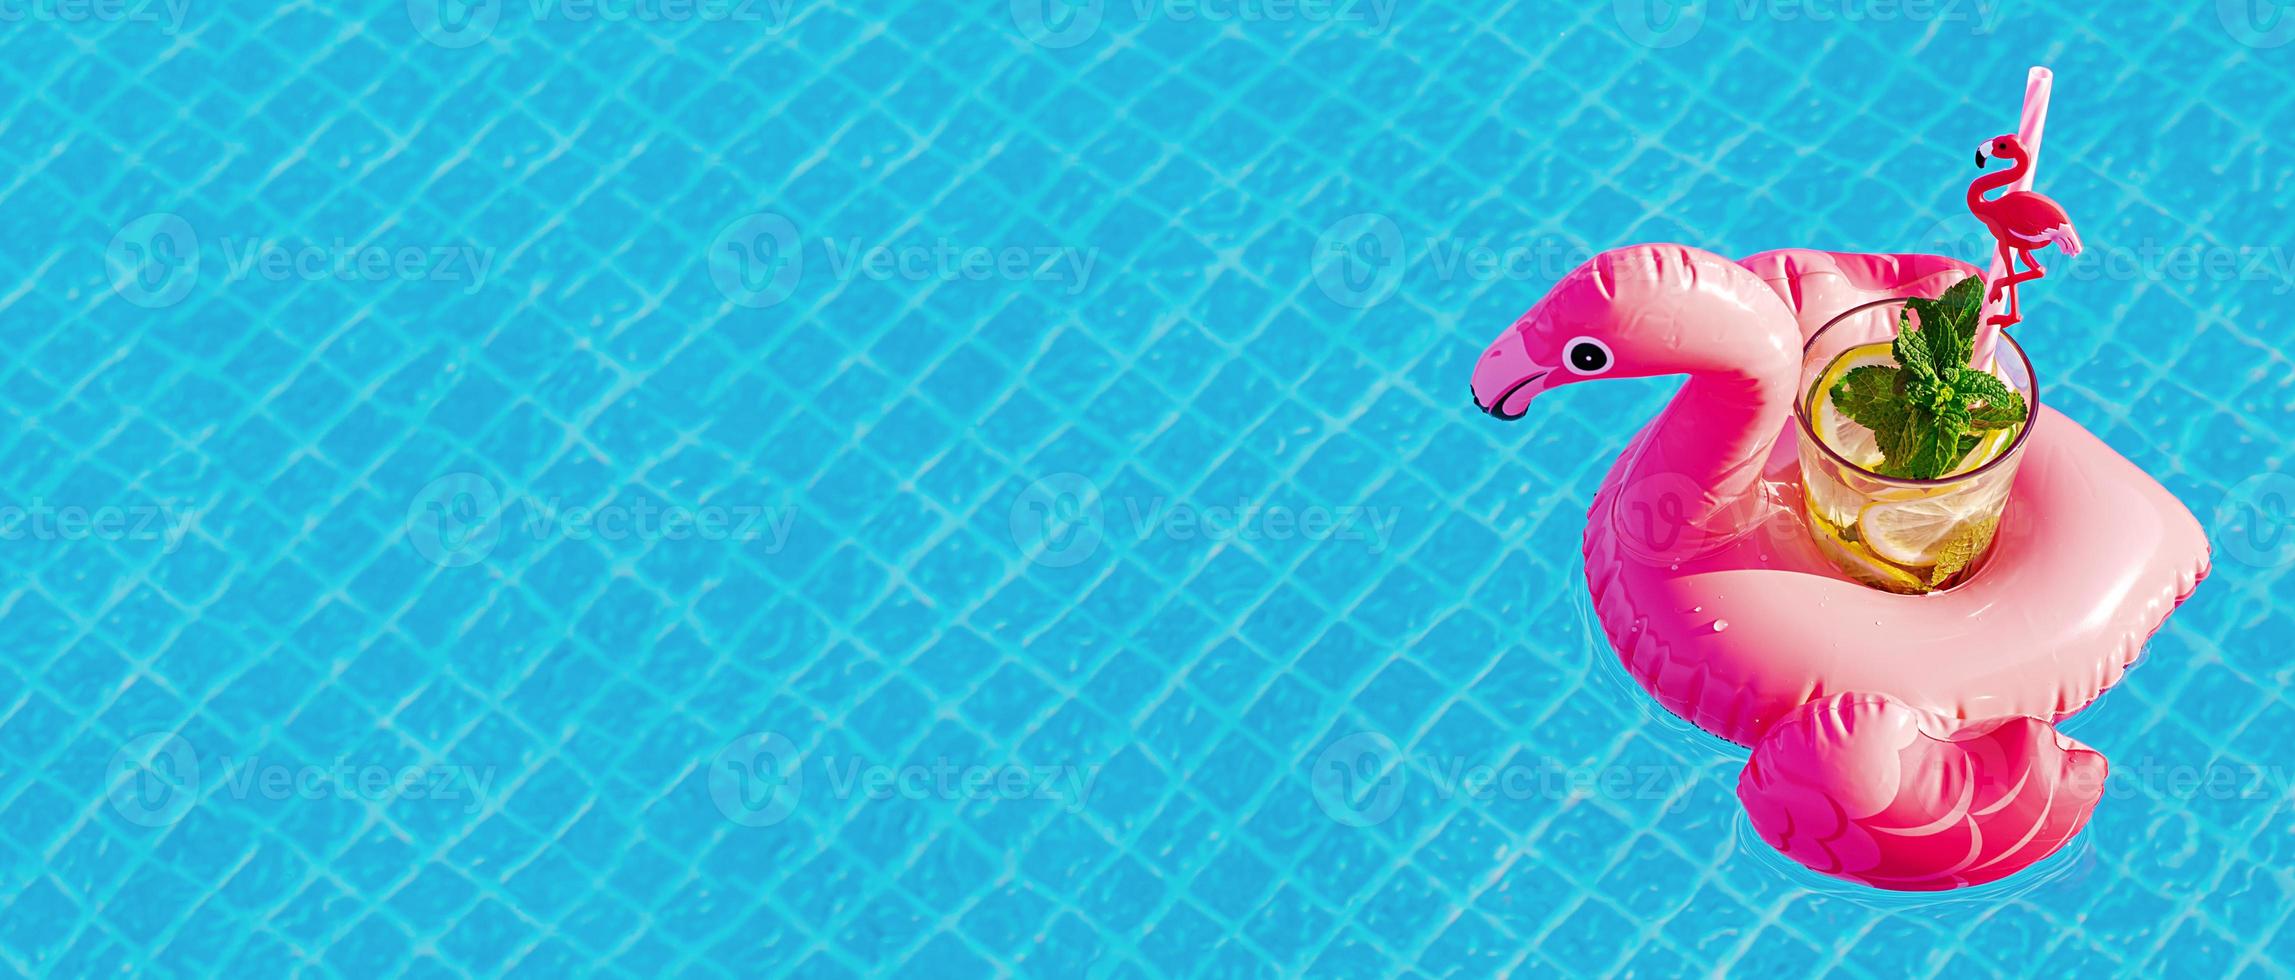 färsk coctail mojito på uppblåsbar rosa flamingo leksak vid poolen. semester koncept. foto